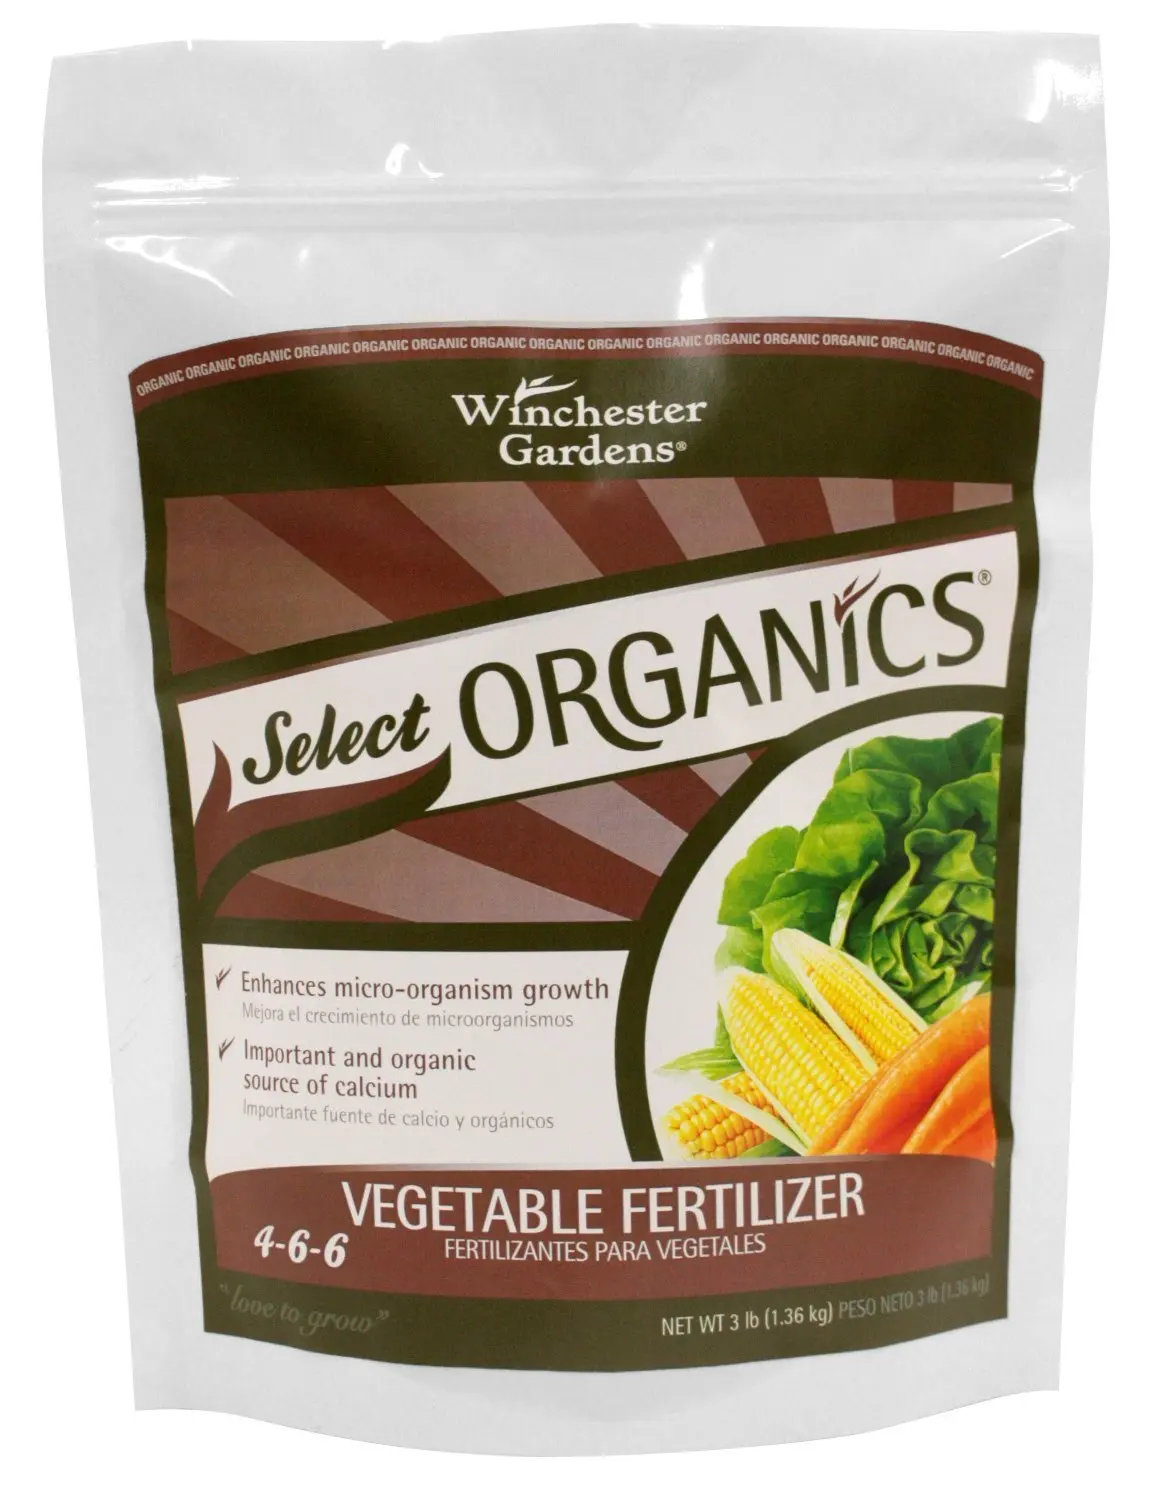 Vegetable Fertilizer Chart